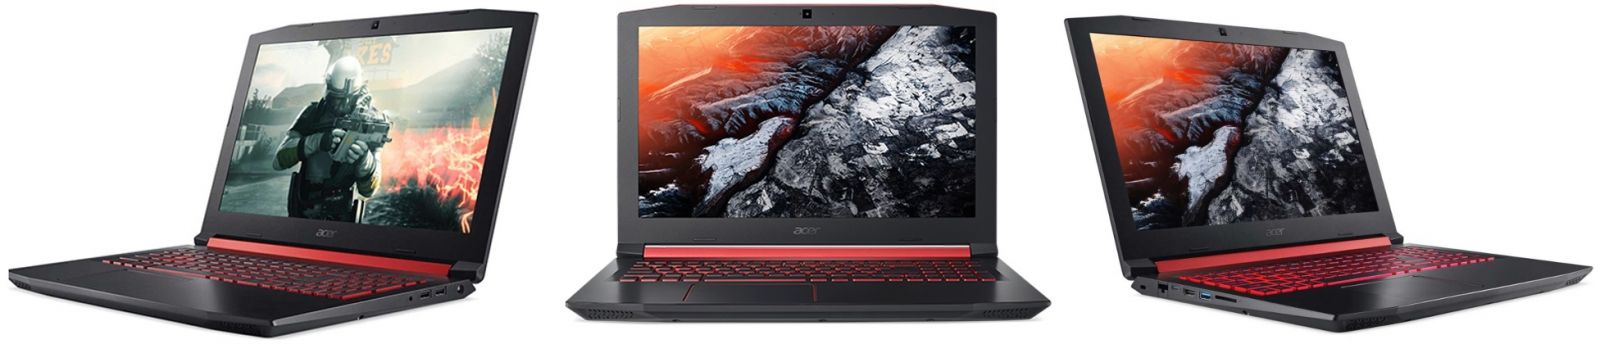 Laptop Acer Nitro 5 AN515-51-51UM NH.Q2RSV.003